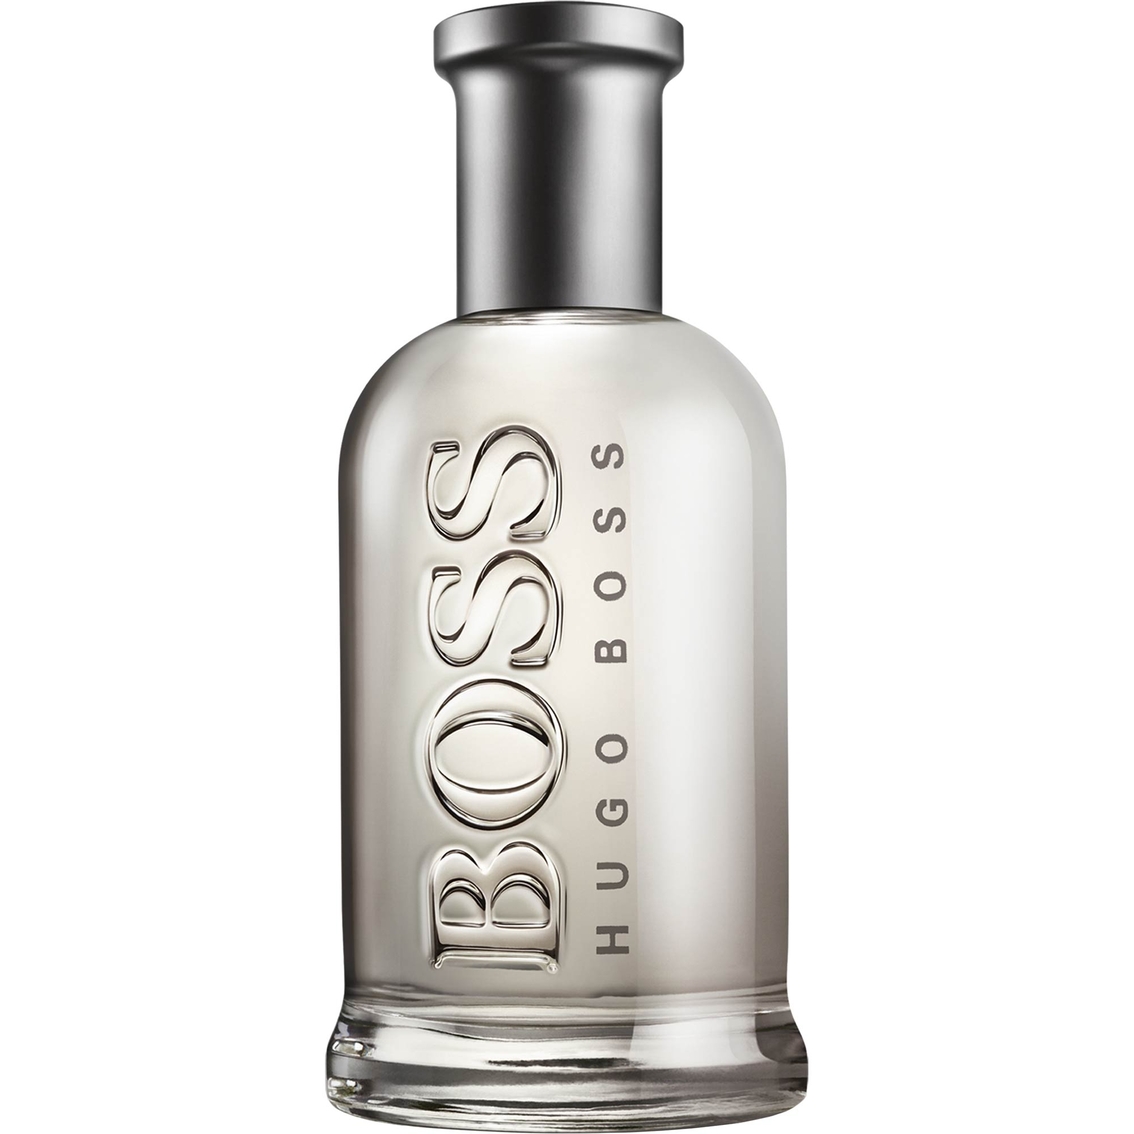 Hugo Boss Eau De Toilette Spray | Men's Fragrances | Beauty & Health ...